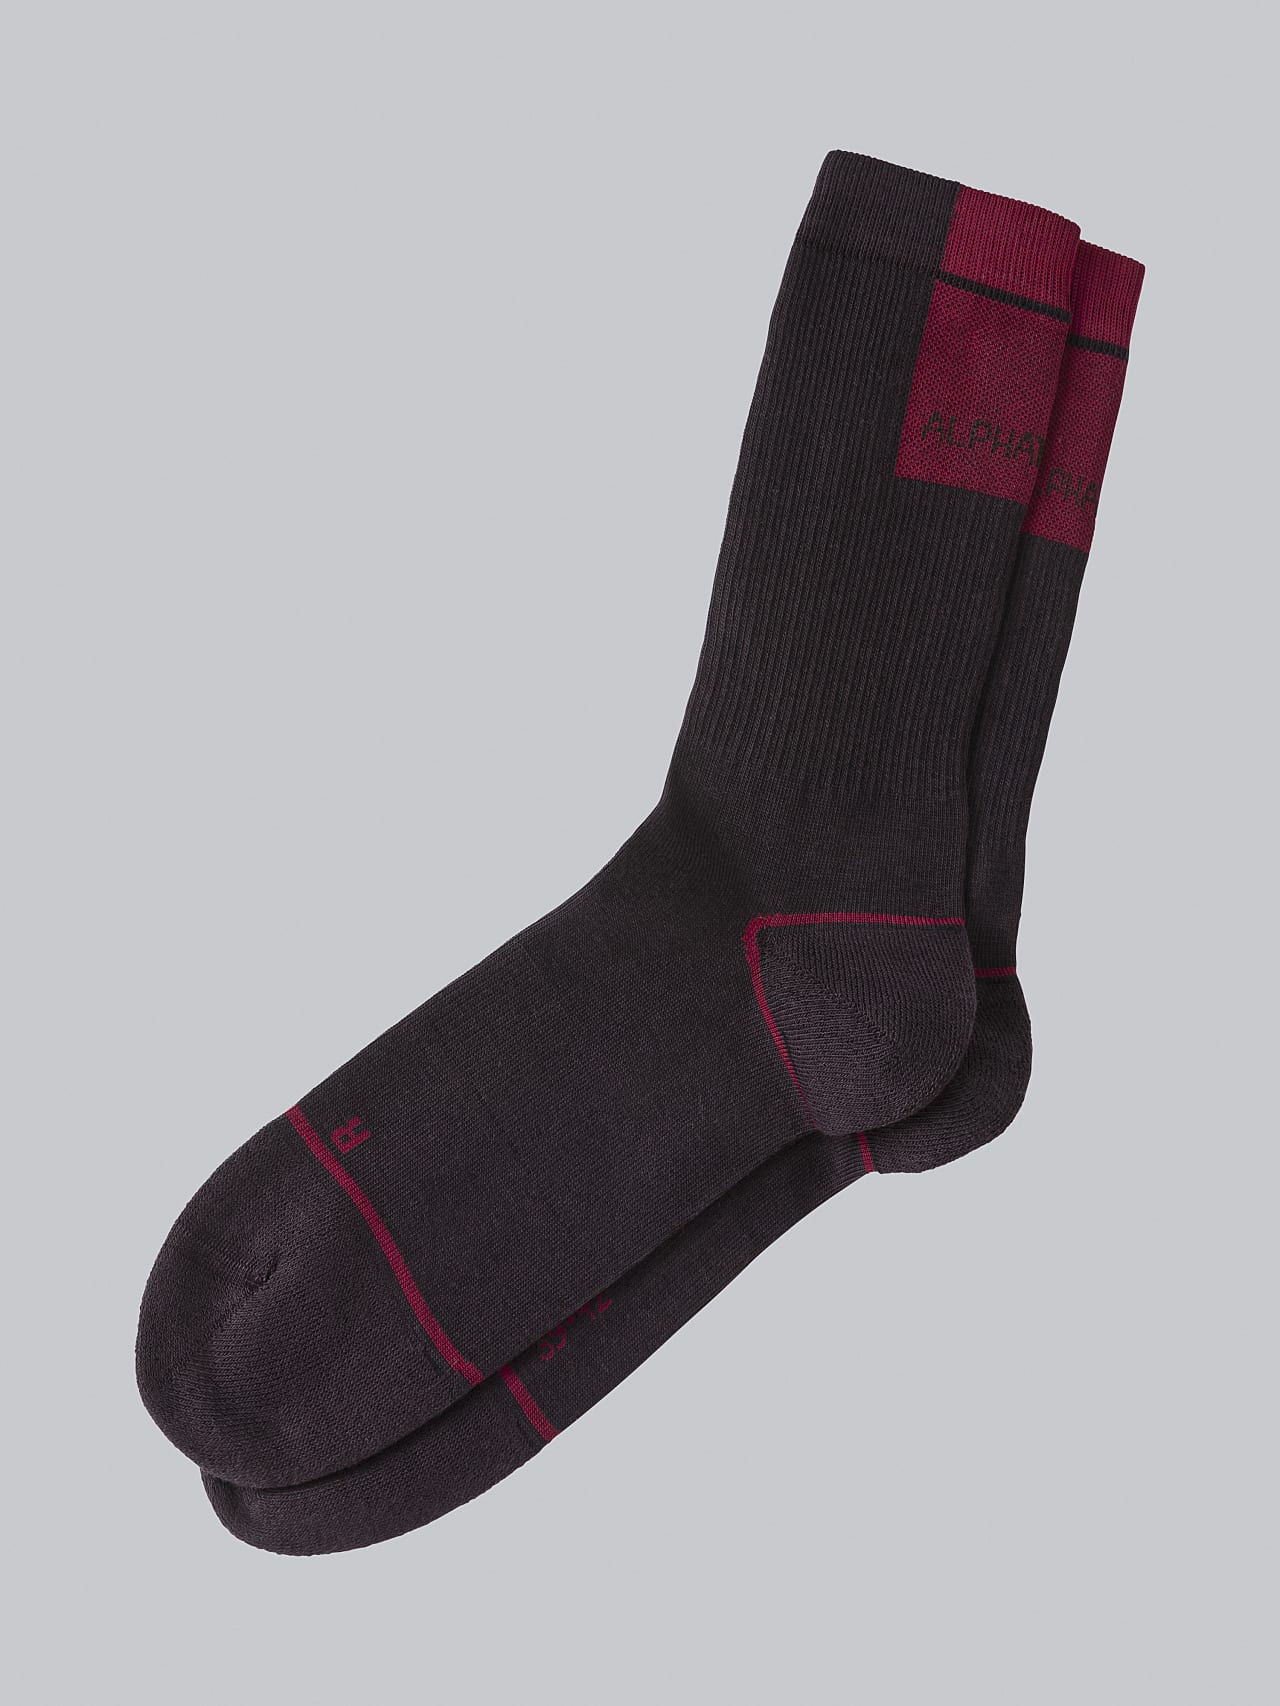 AlphaTauri | ATENI V3.Y5.02 | Premium Knit Socks in Burgundy for Unisex